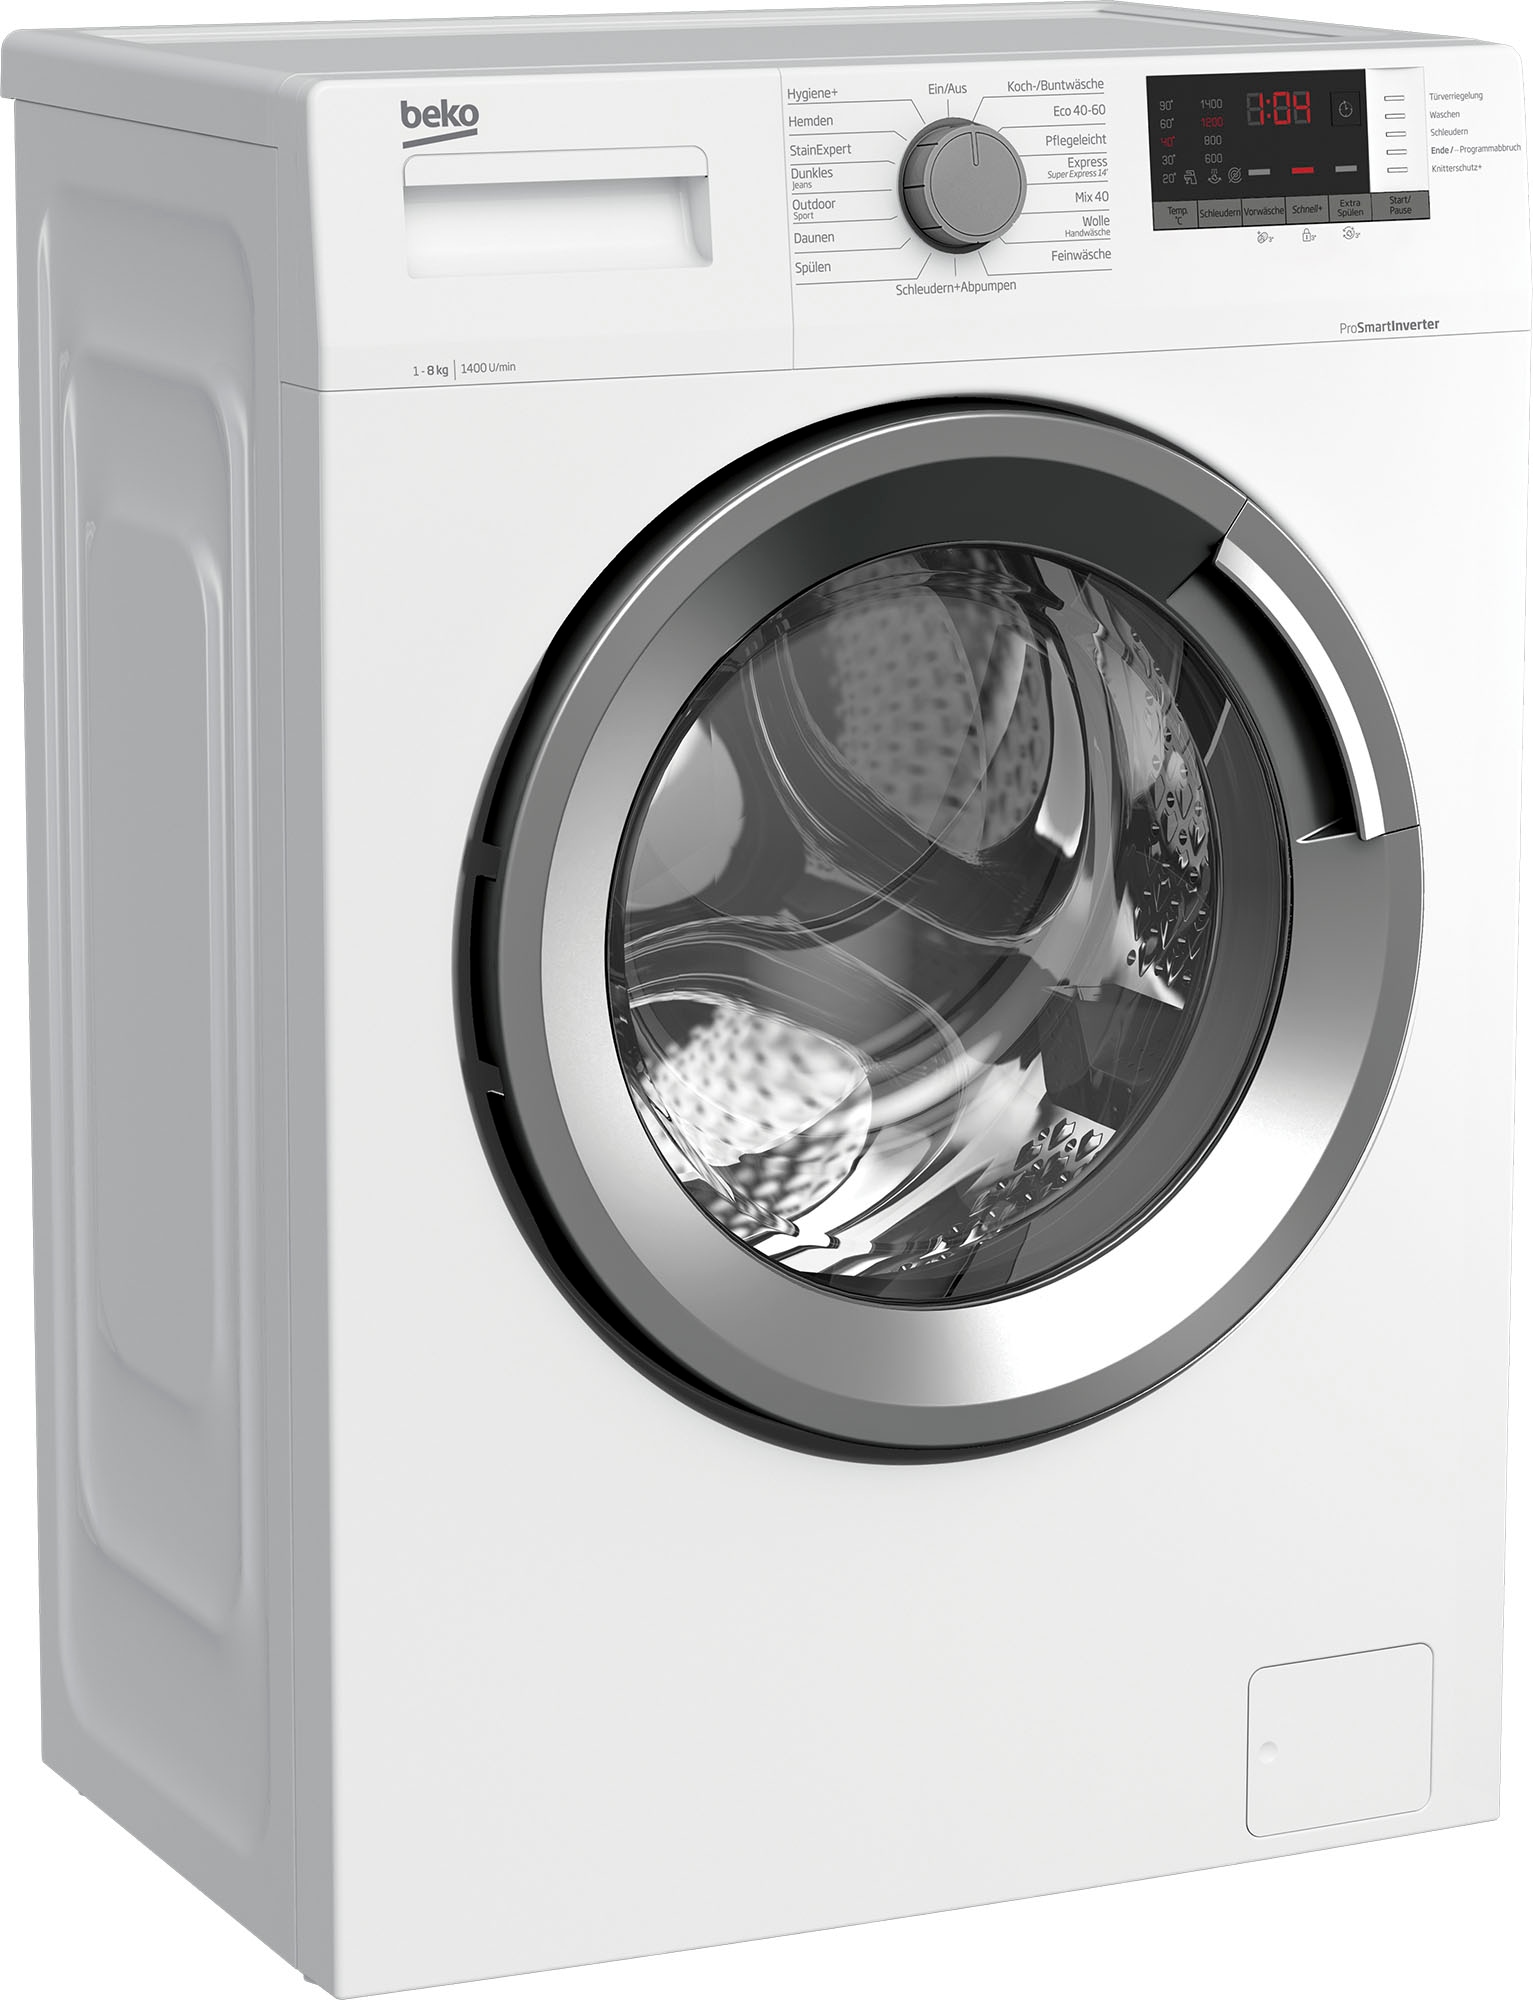 BEKO Waschmaschine bei 1400 WMO822A 8 kg, U/min »WMO822A«, 7001440096, online